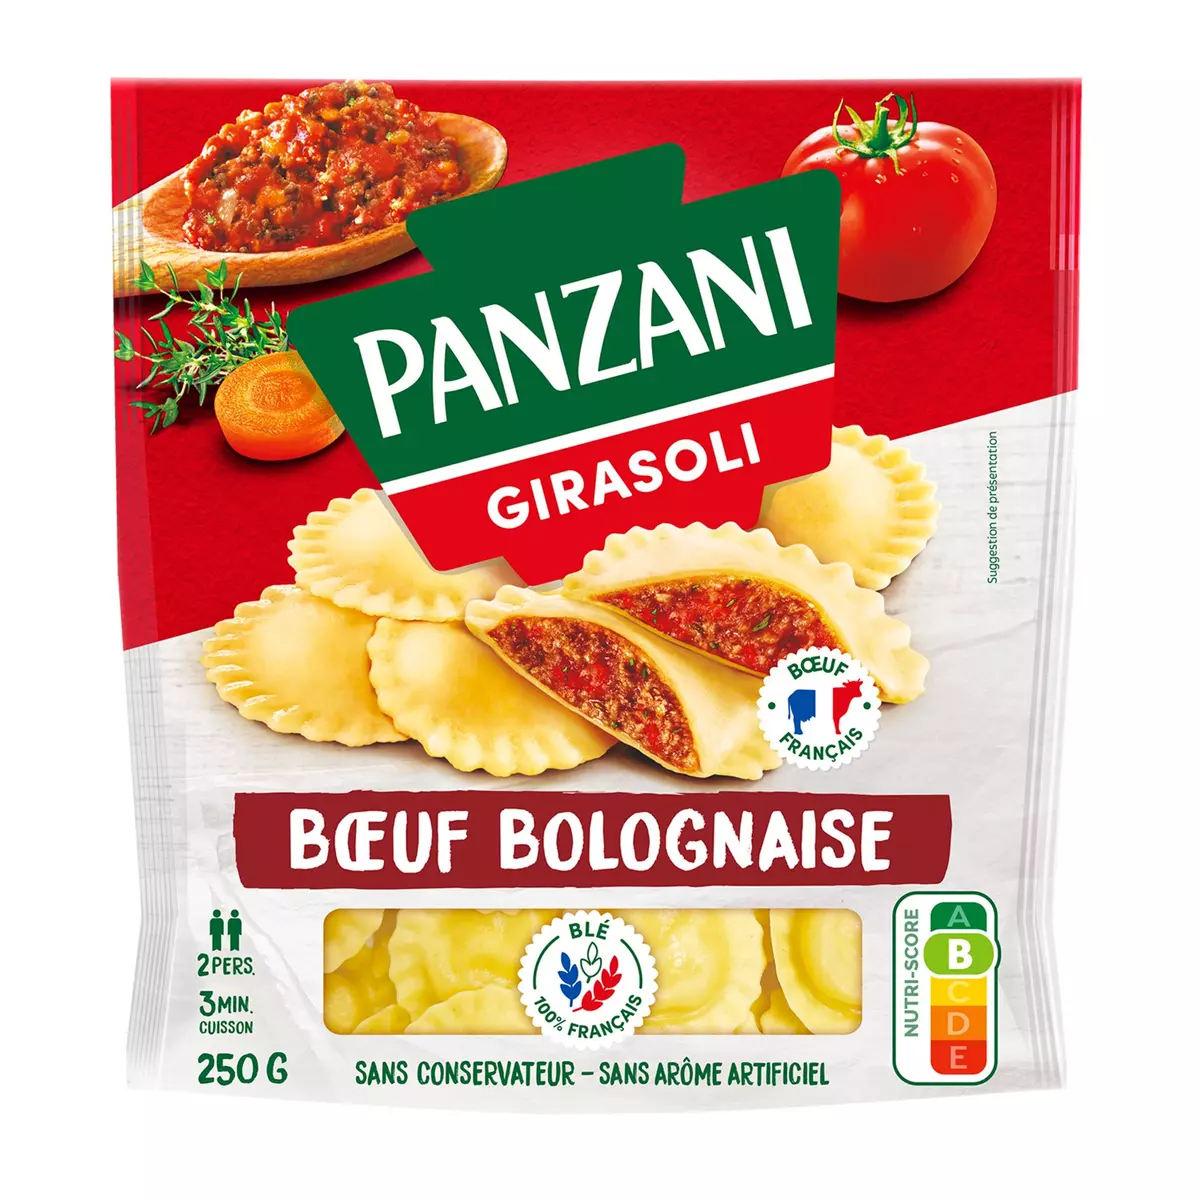 PANZANI Girasoli boeuf bolognaise 2 portions 250g